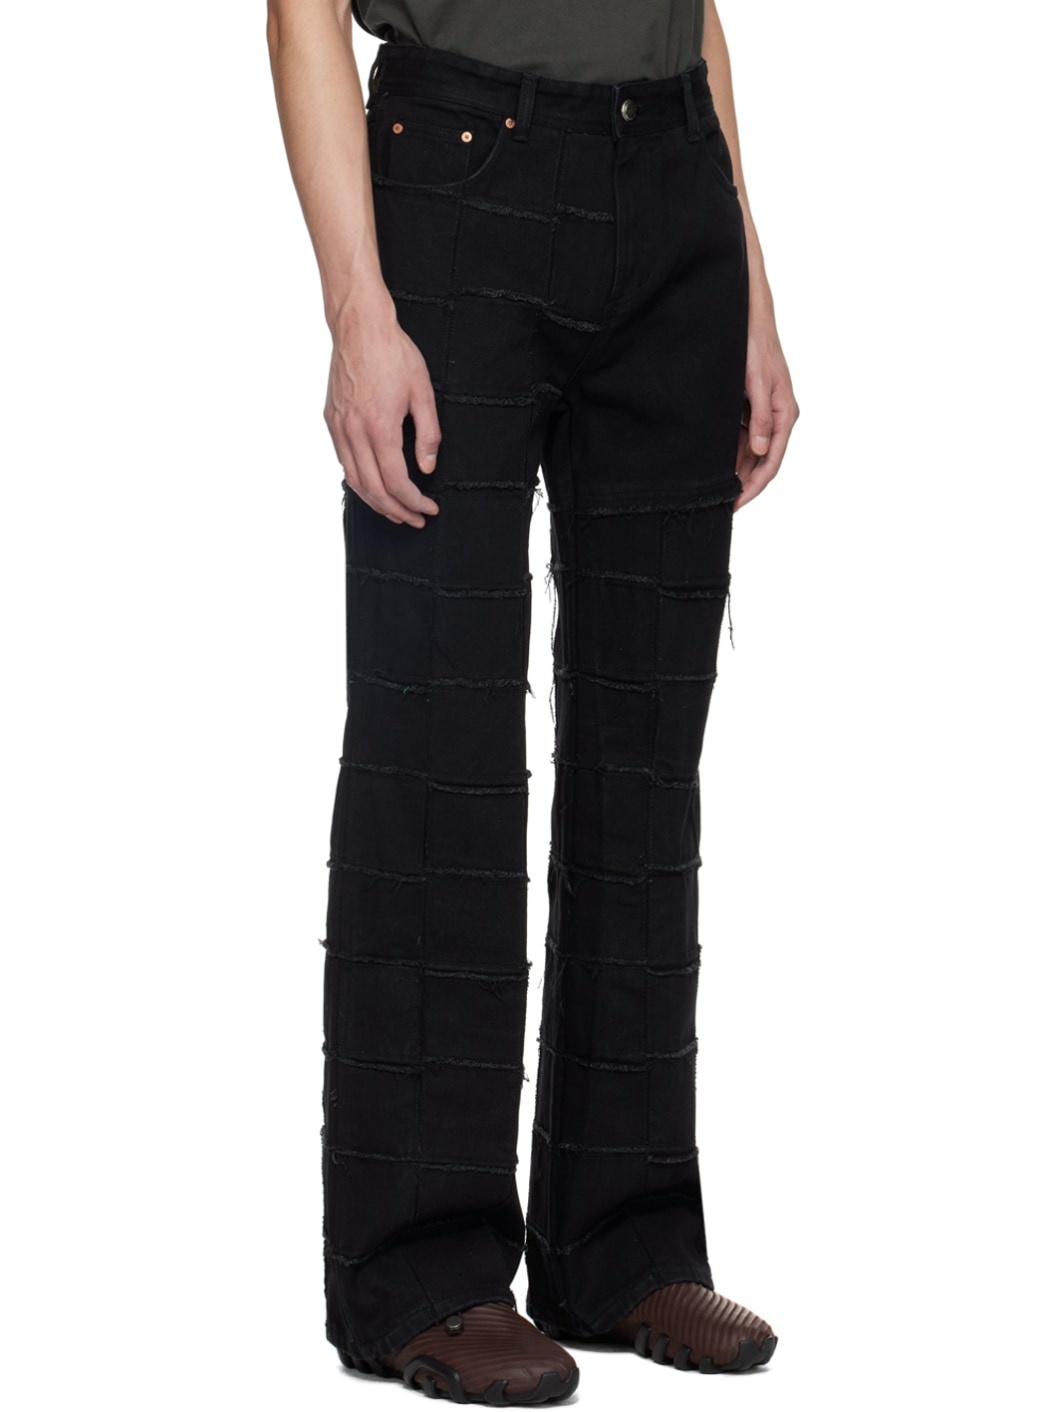 Black New Patchwork Jeans - 2